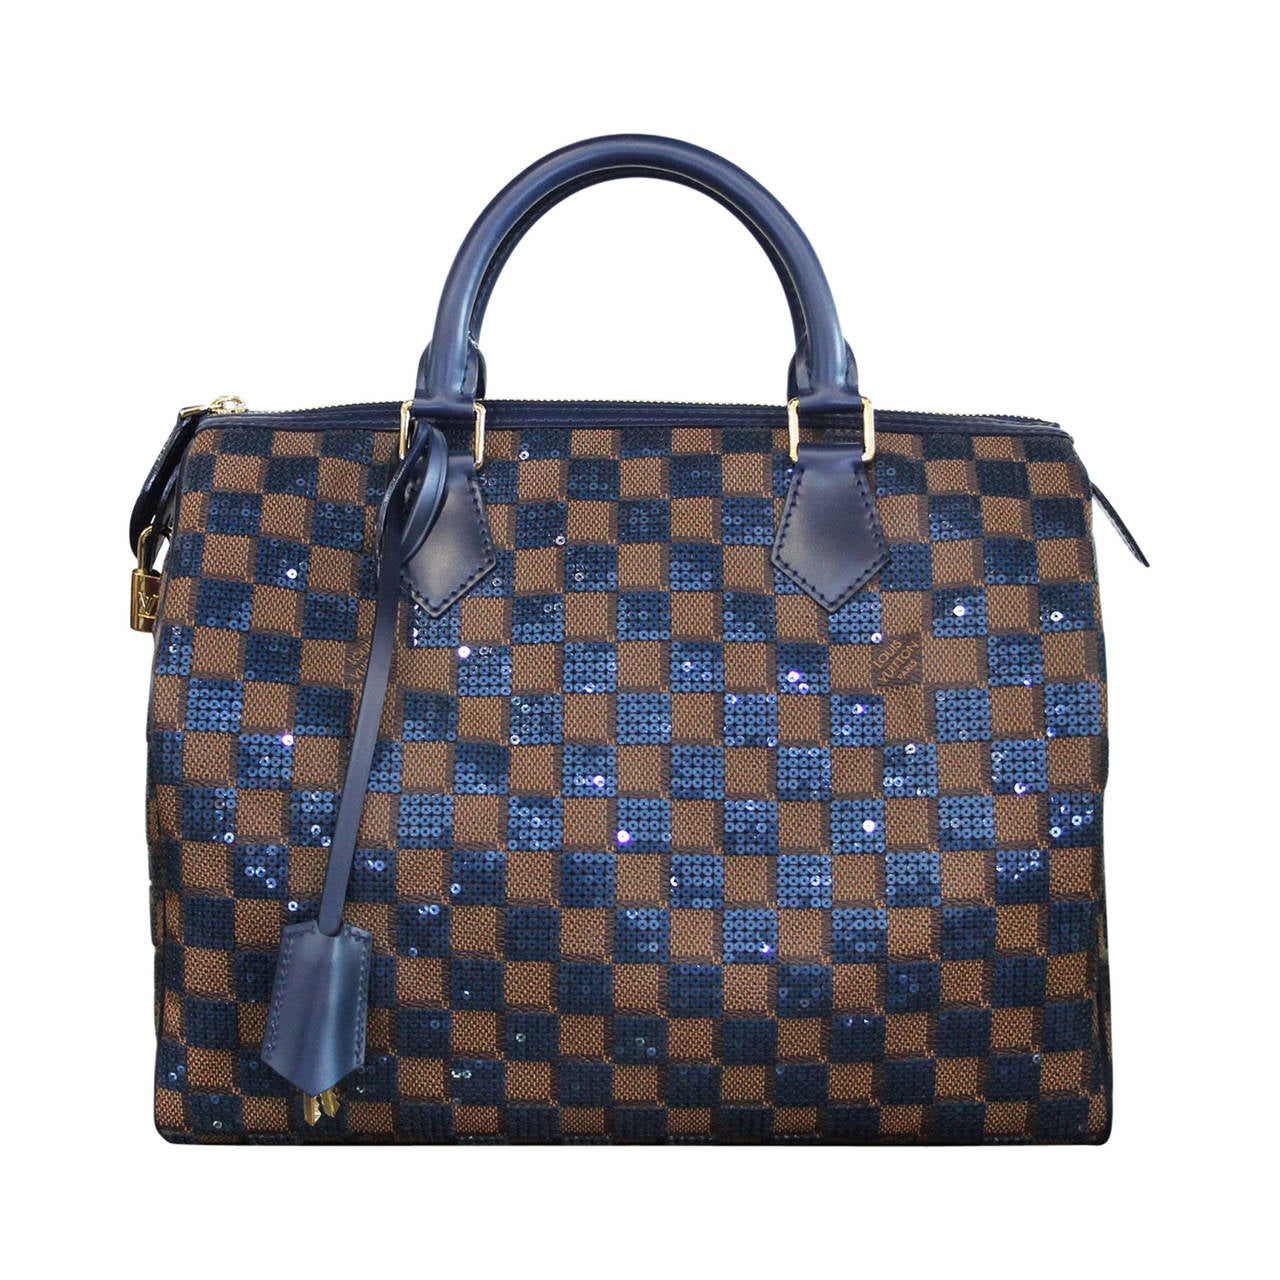 Louis Vuitton Sequins Speedy 30 Damier Pailletes Infini Ebene Bag at 1stdibs